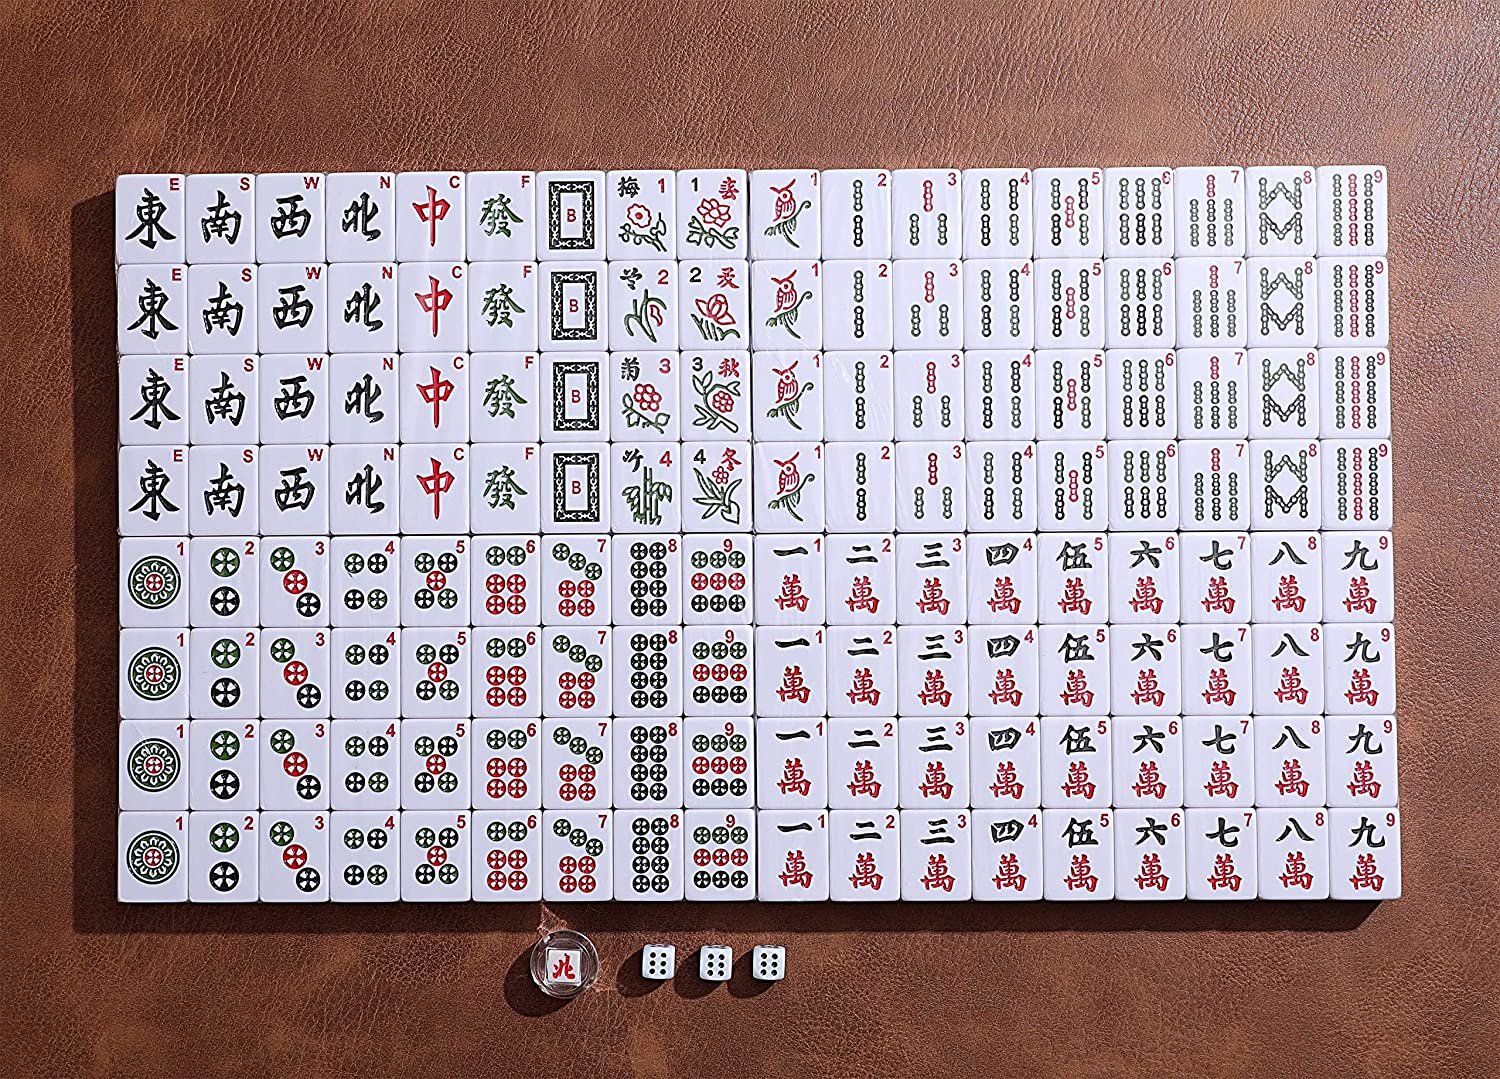 Jumbo Asian Green and White Mahjong Tiles with Tote - Where the